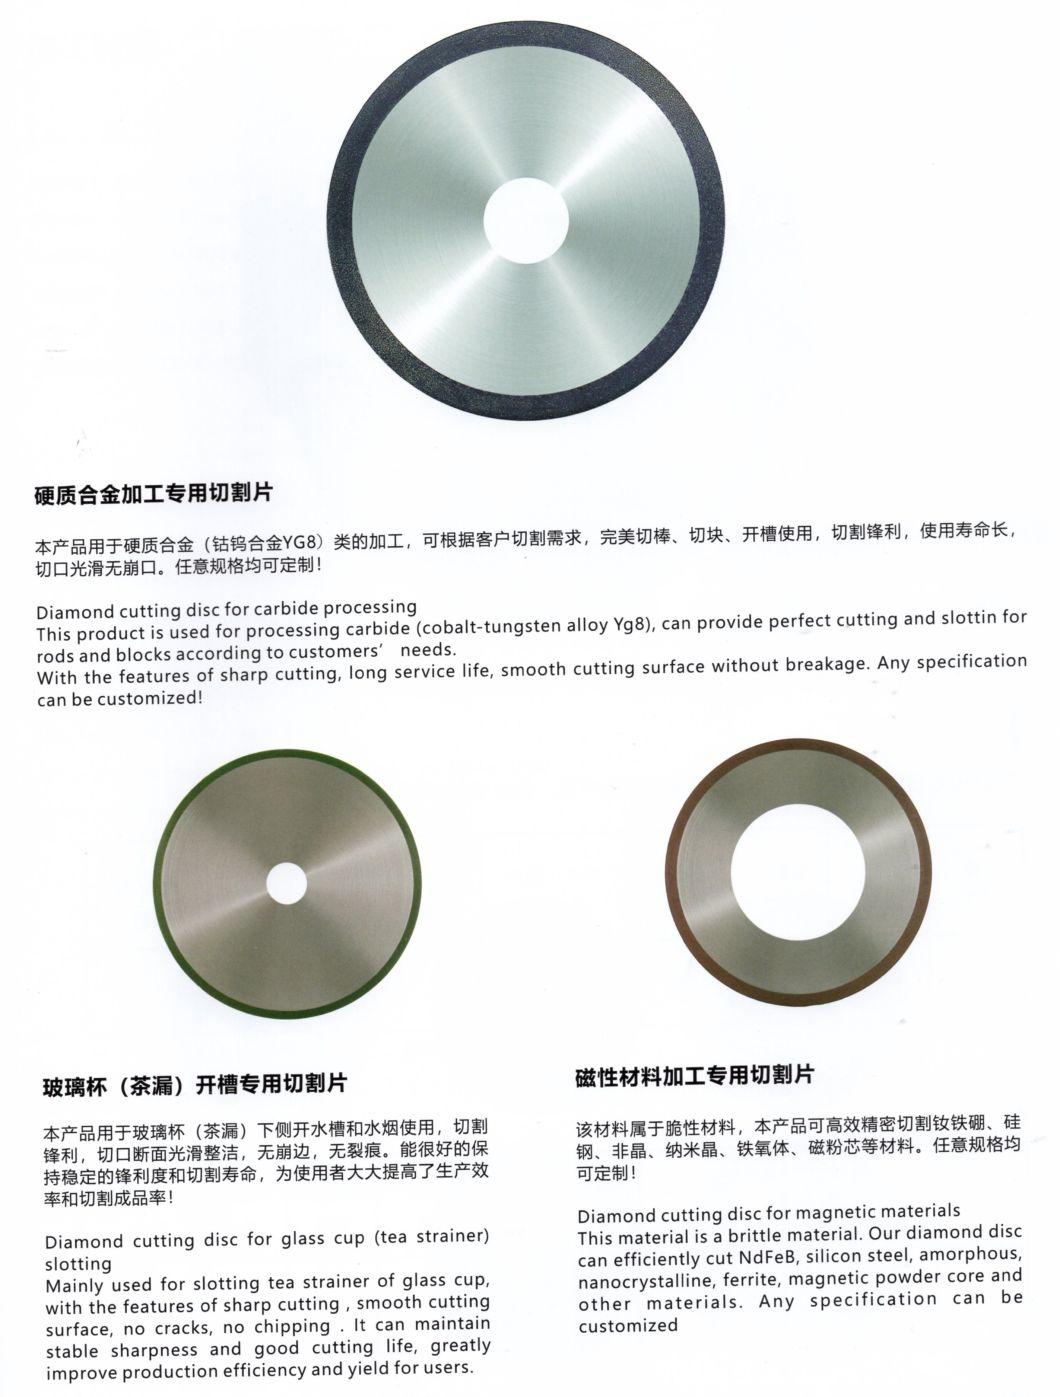 Metal Bonded Ultrathin Diamond Cutting Disc for Fuse Glass Tube and Quartz Tube